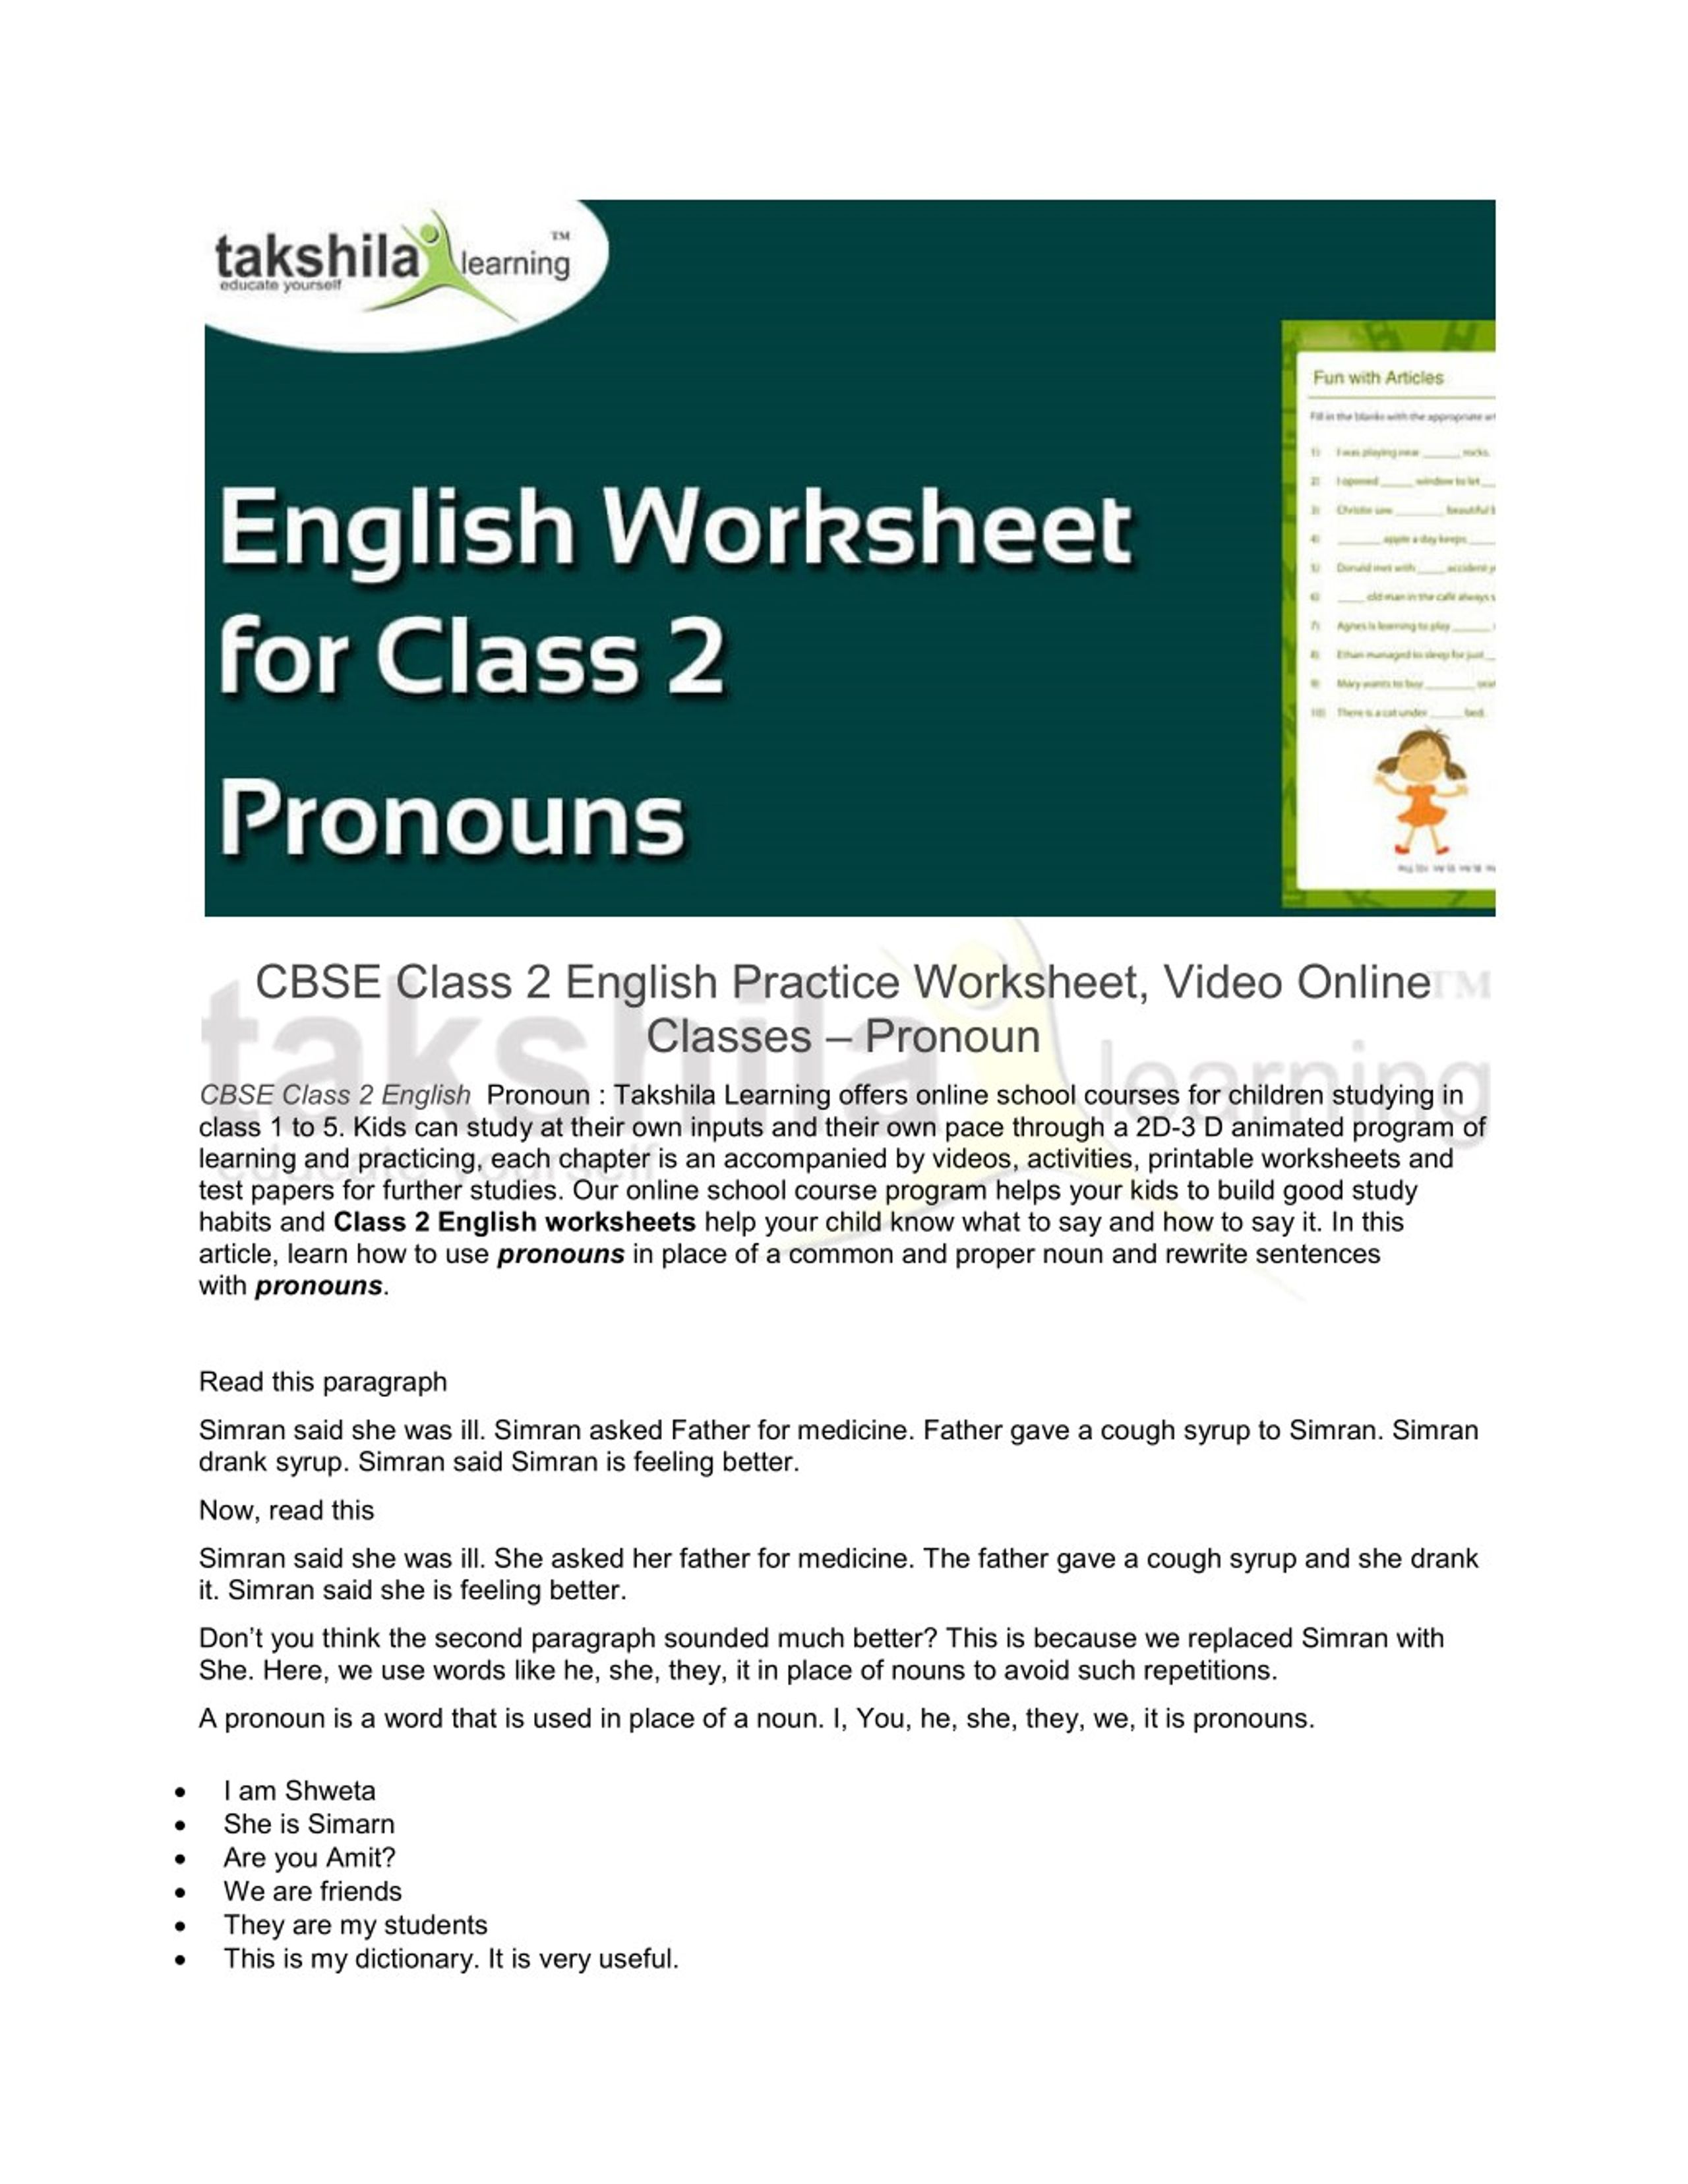 PPT CBSE Class 2 English Practice Worksheet Pronouns PowerPoint Presentation ID 7678669